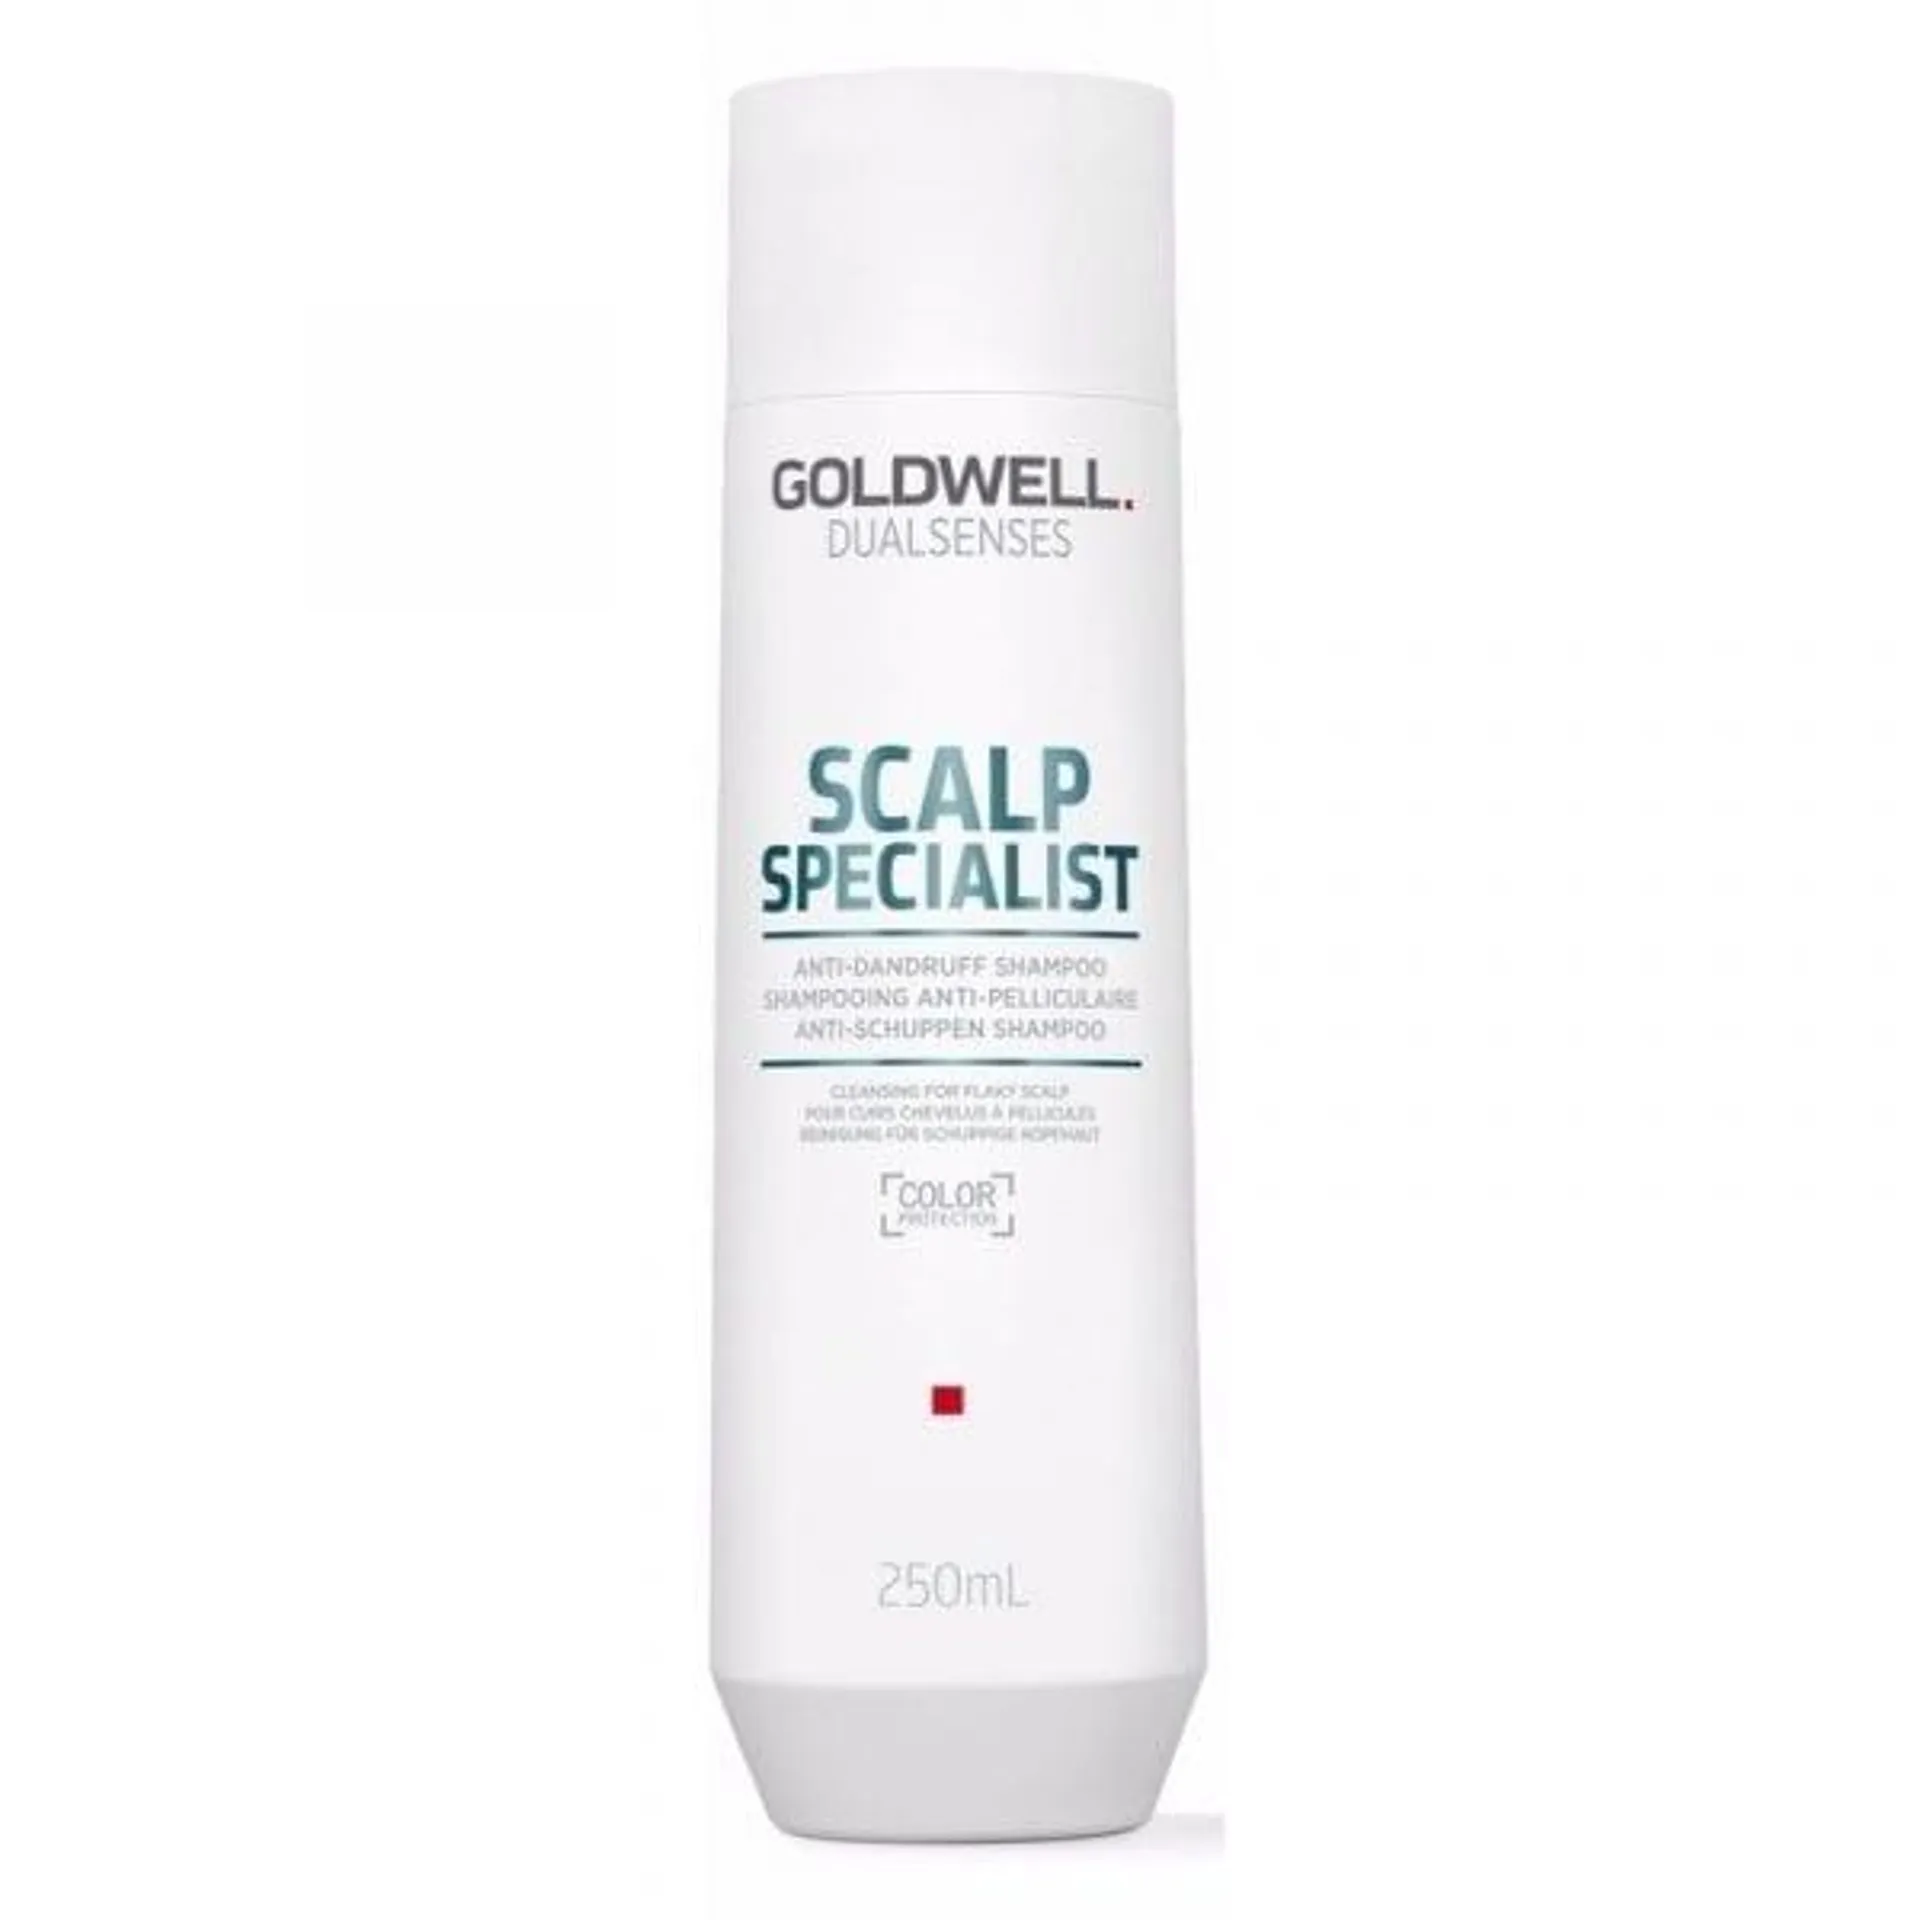 Goldwell Scalp Specialist Anti-Dandruff Shampoo 250ml